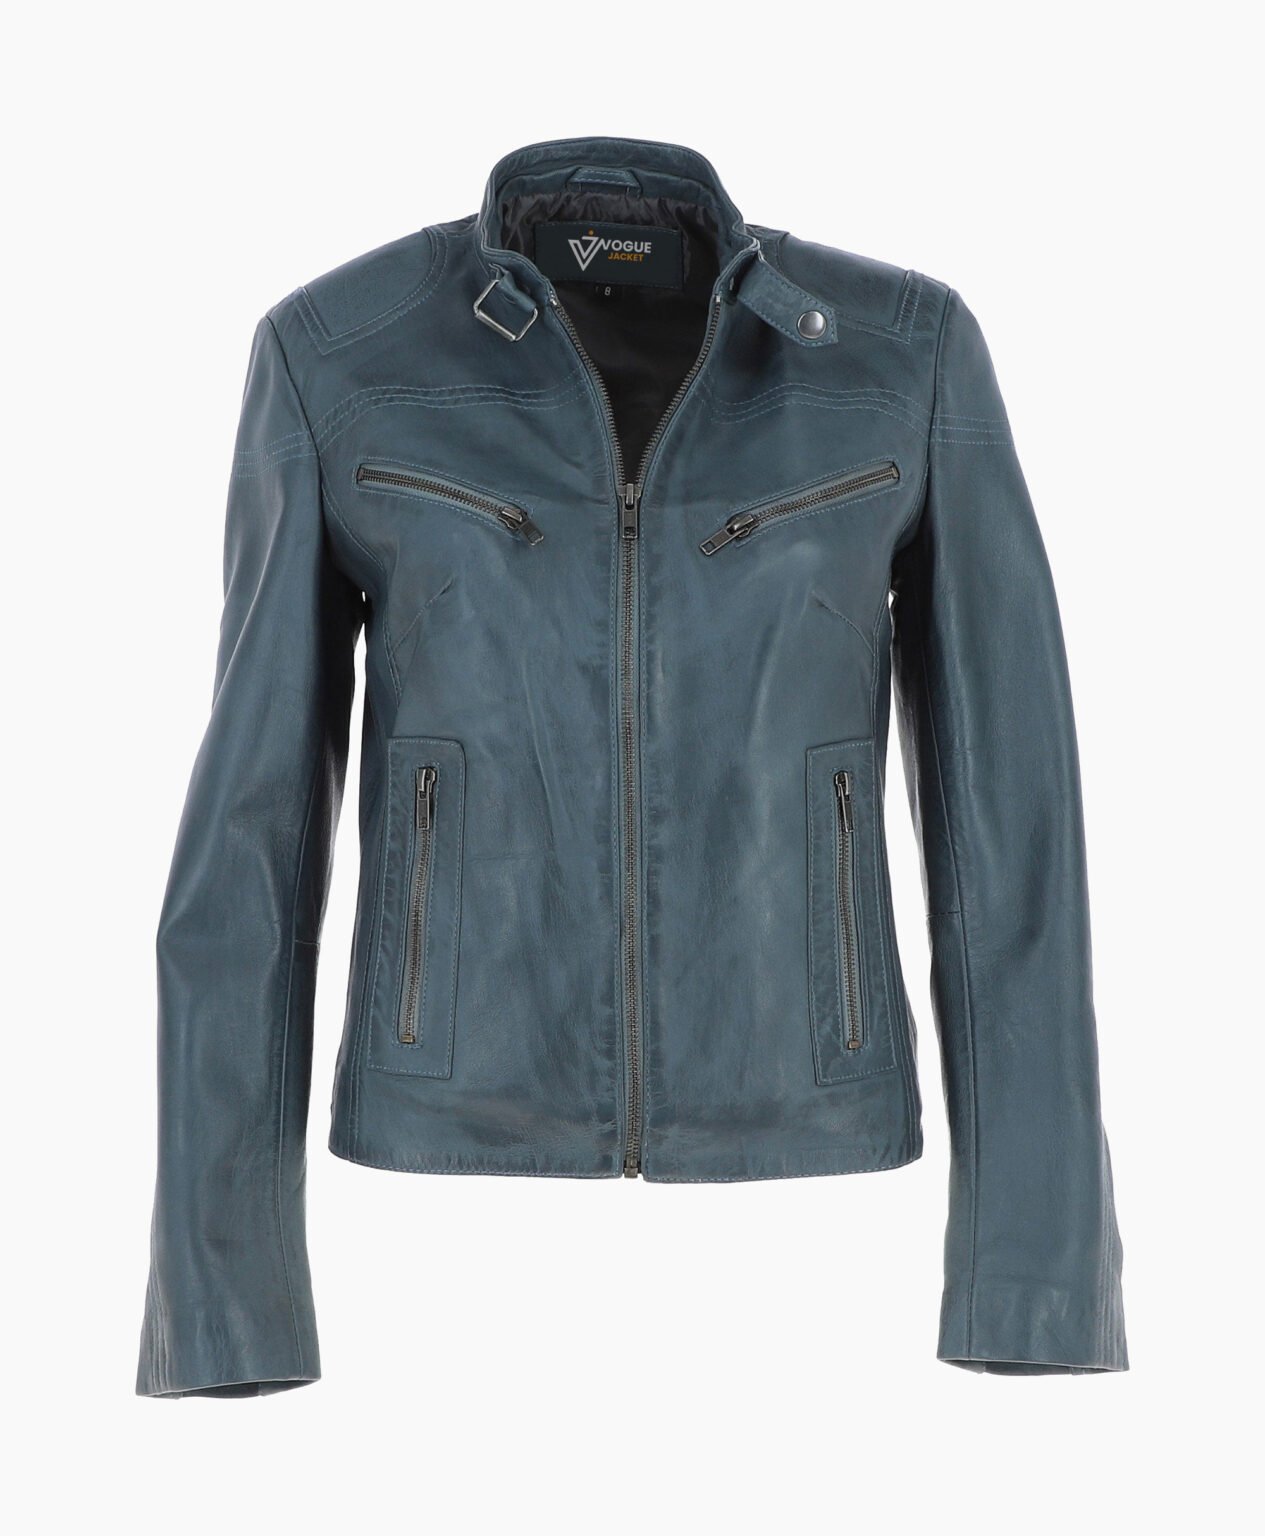 vogue-jacket-leather-biker-jacket-gray-alton-image200